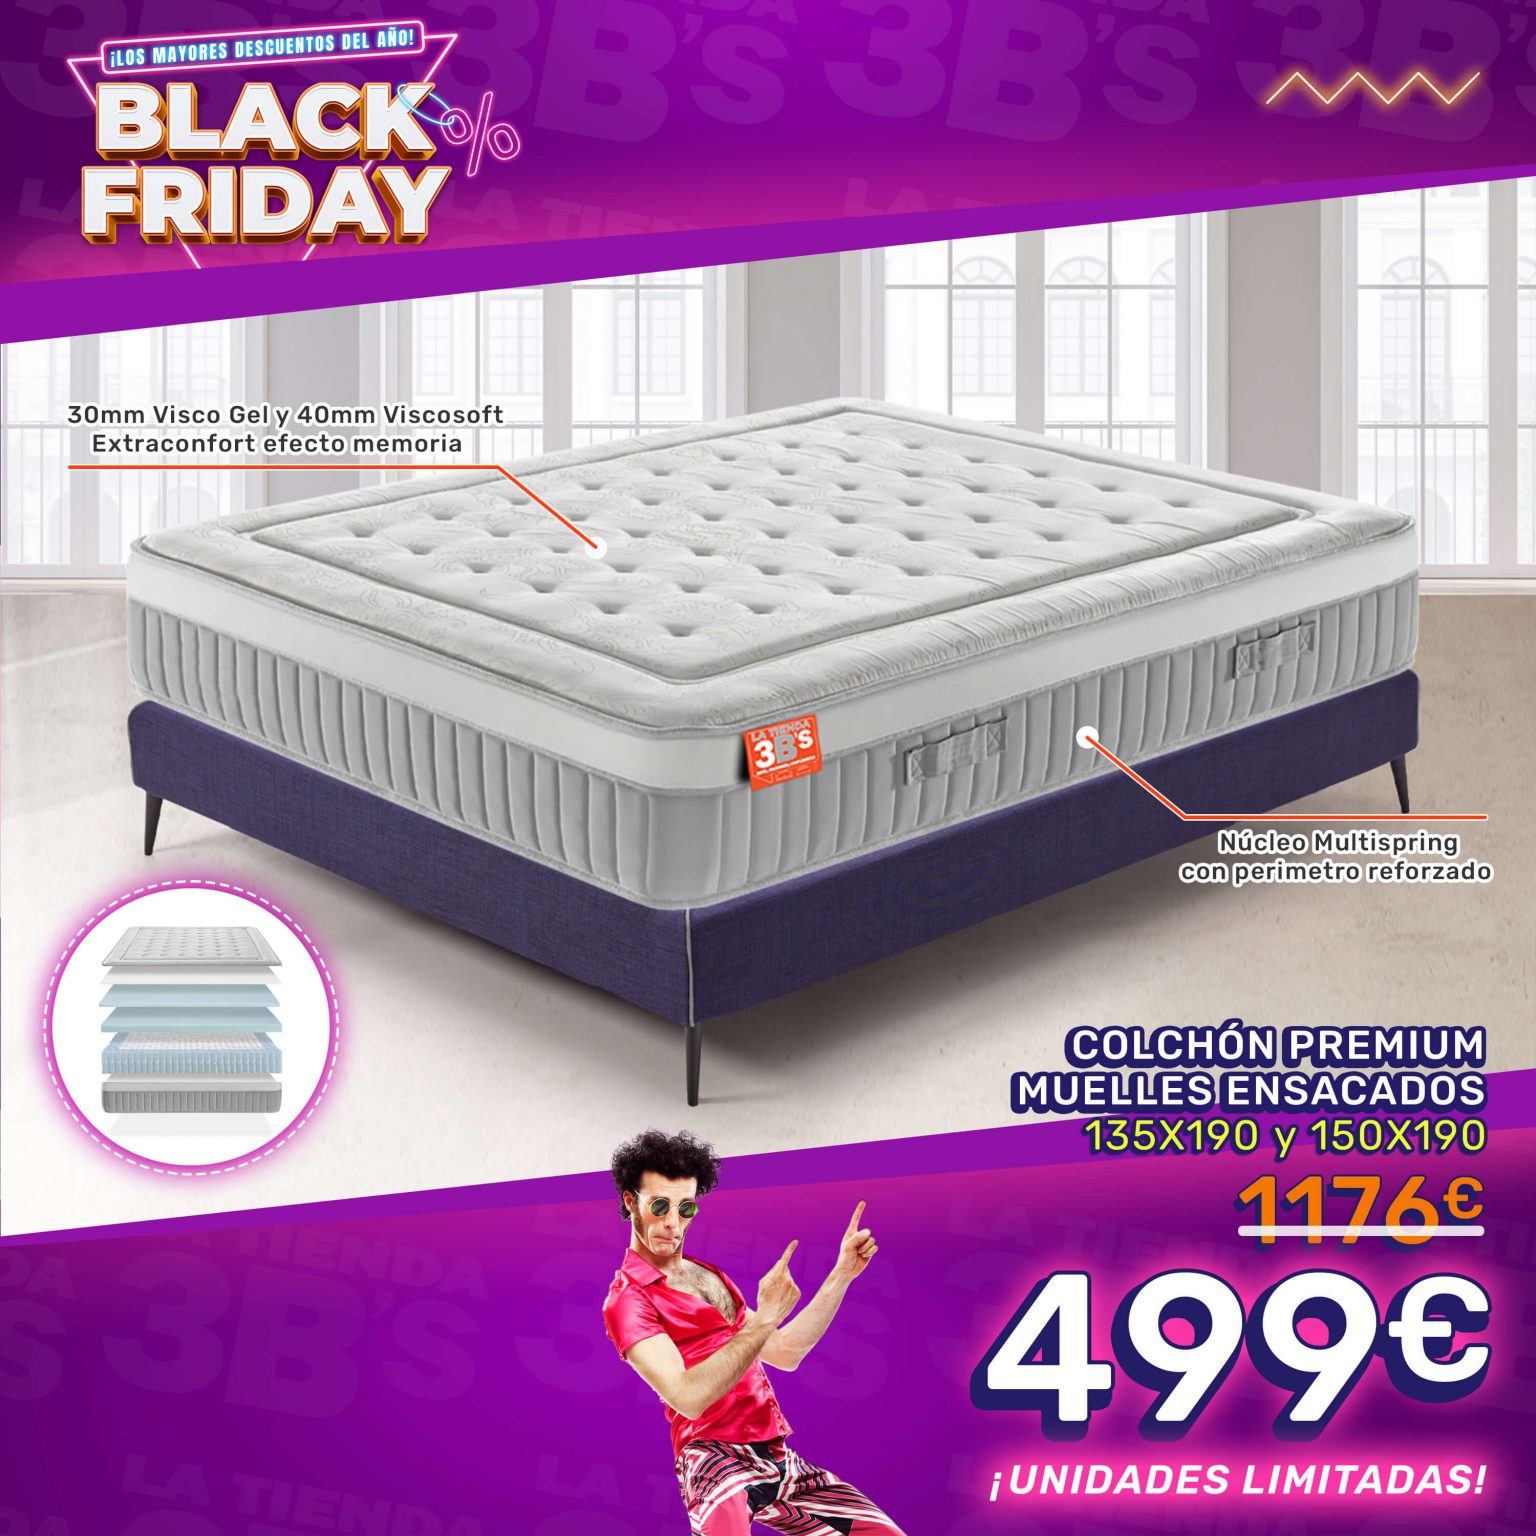 Black Friday 2022 Oferta Colchon Premium | La Tienda 3Bs